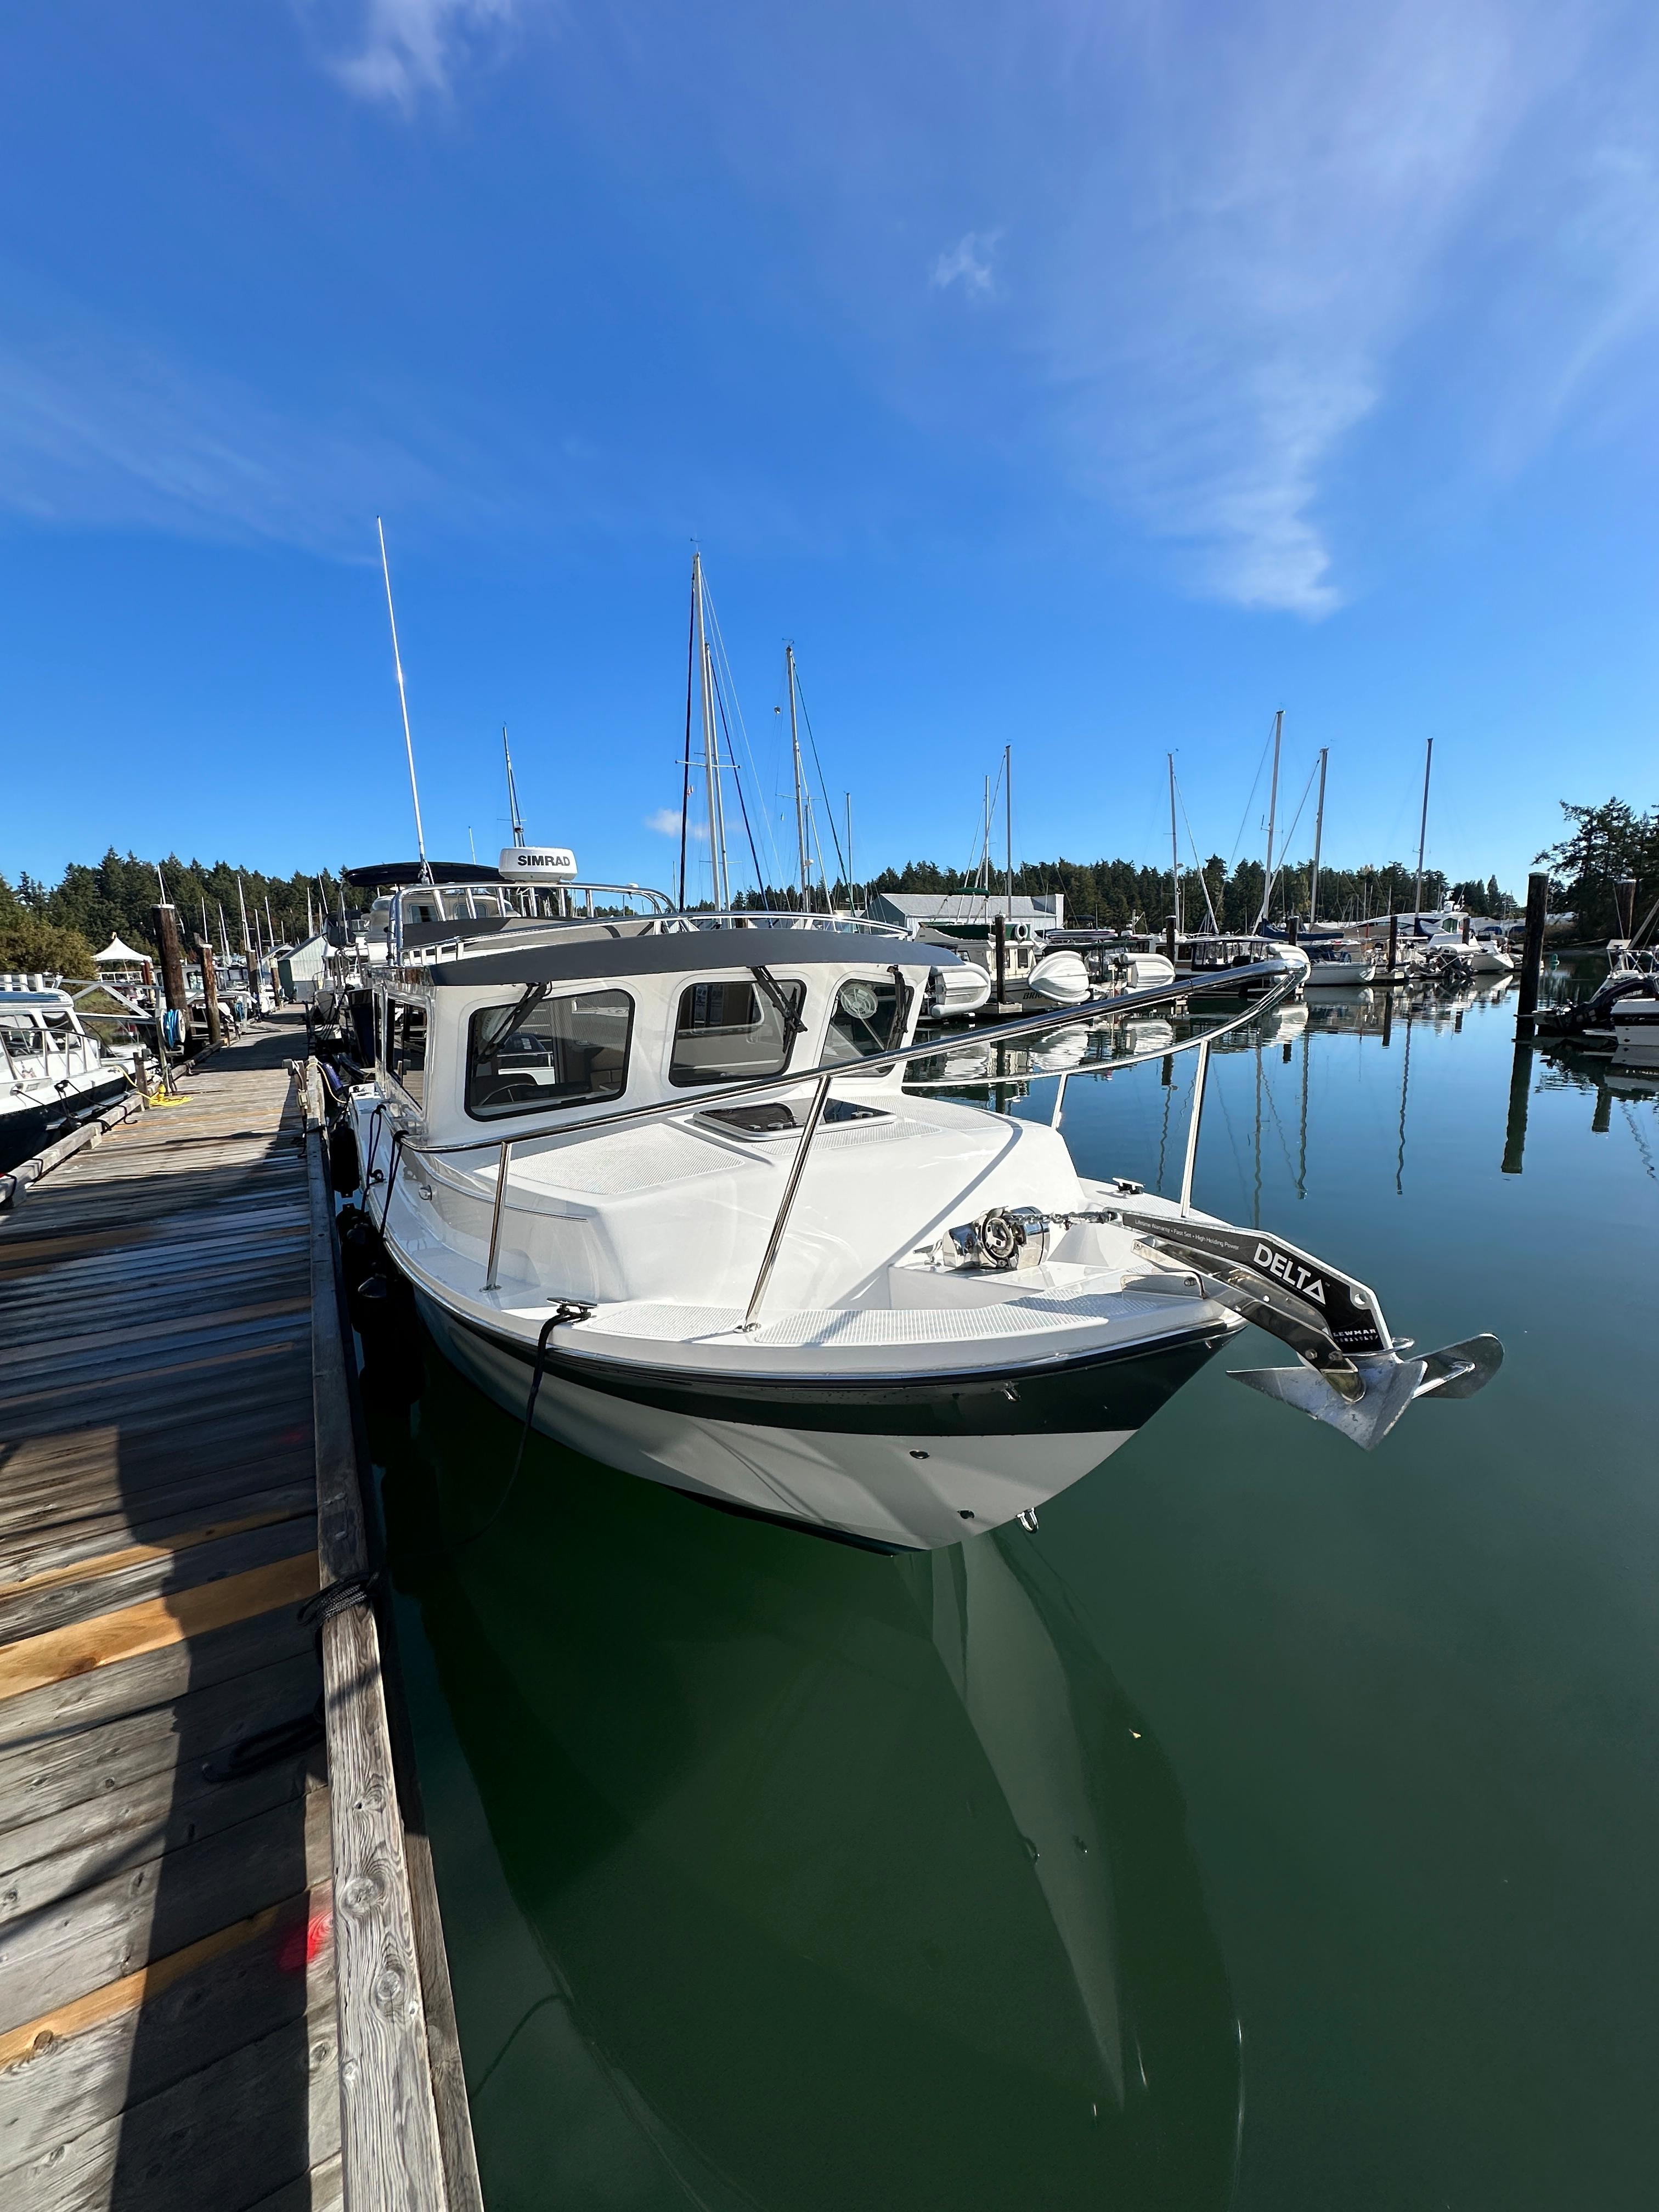 Yacht for Sale, 26 Sea Sport Yachts Sidney, Canada